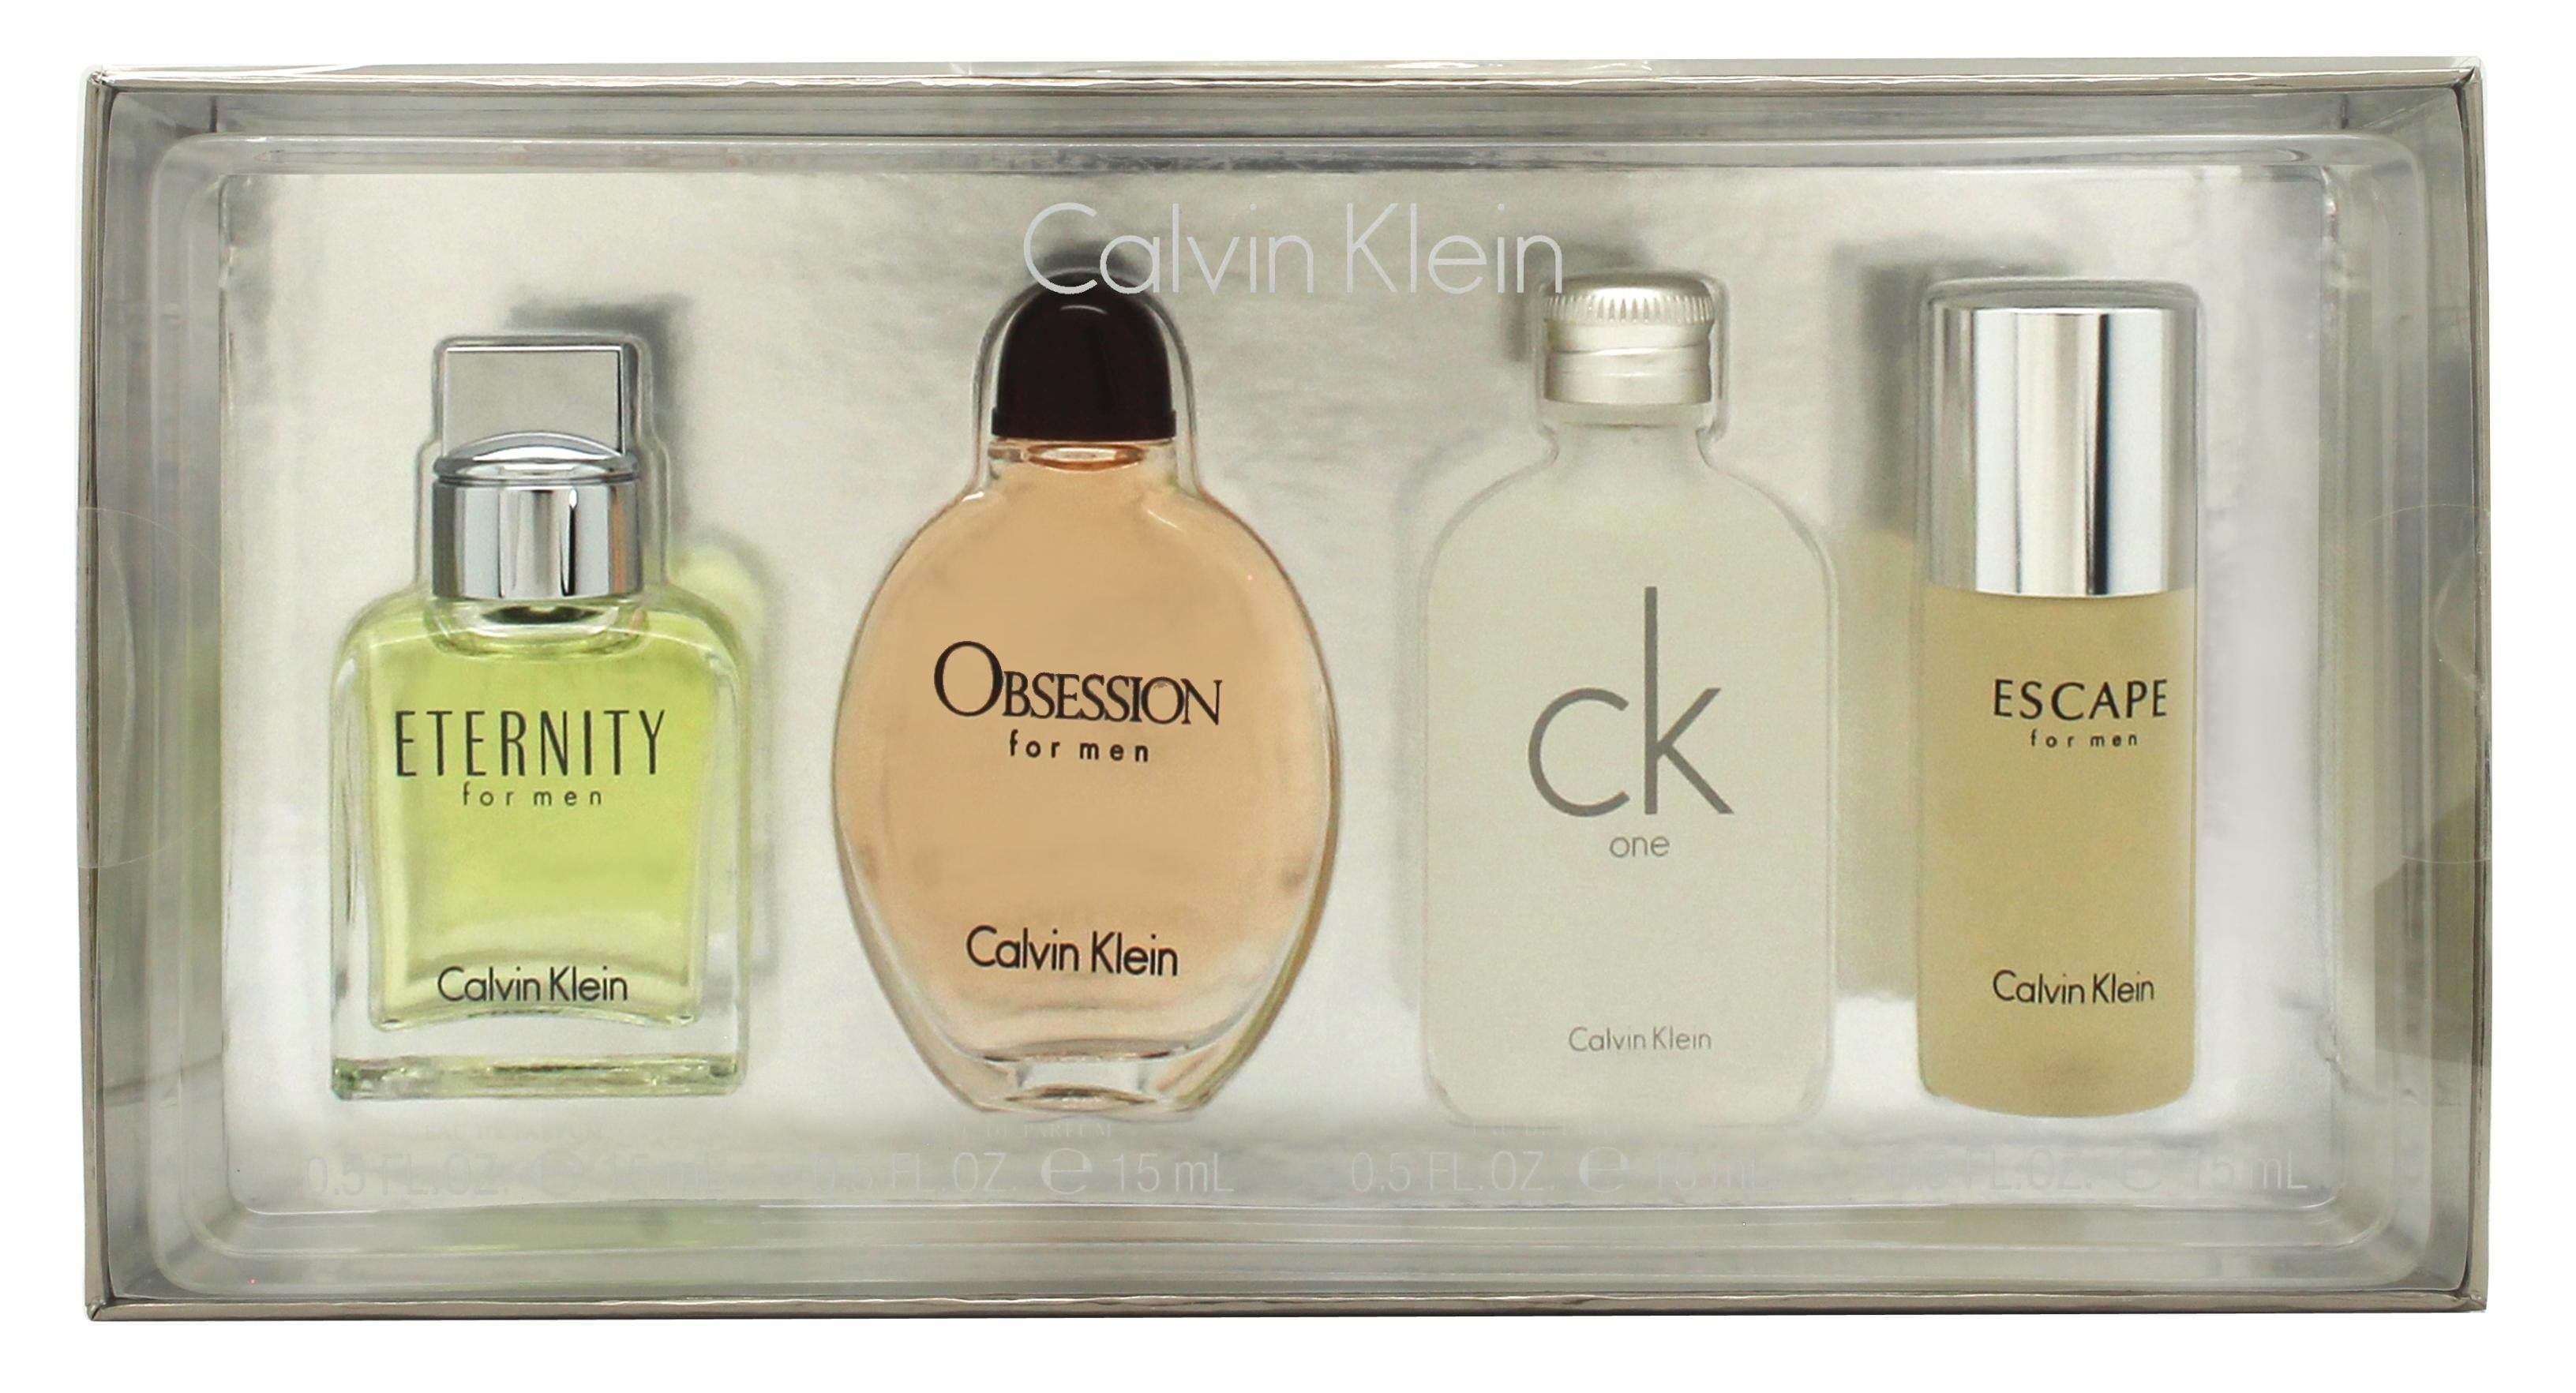 View Calvin Klein Miniature Gift Set 15ml Eternity EDT 15ml Obsession EDT 15ml CK One EDT 15ml Escape EDT information